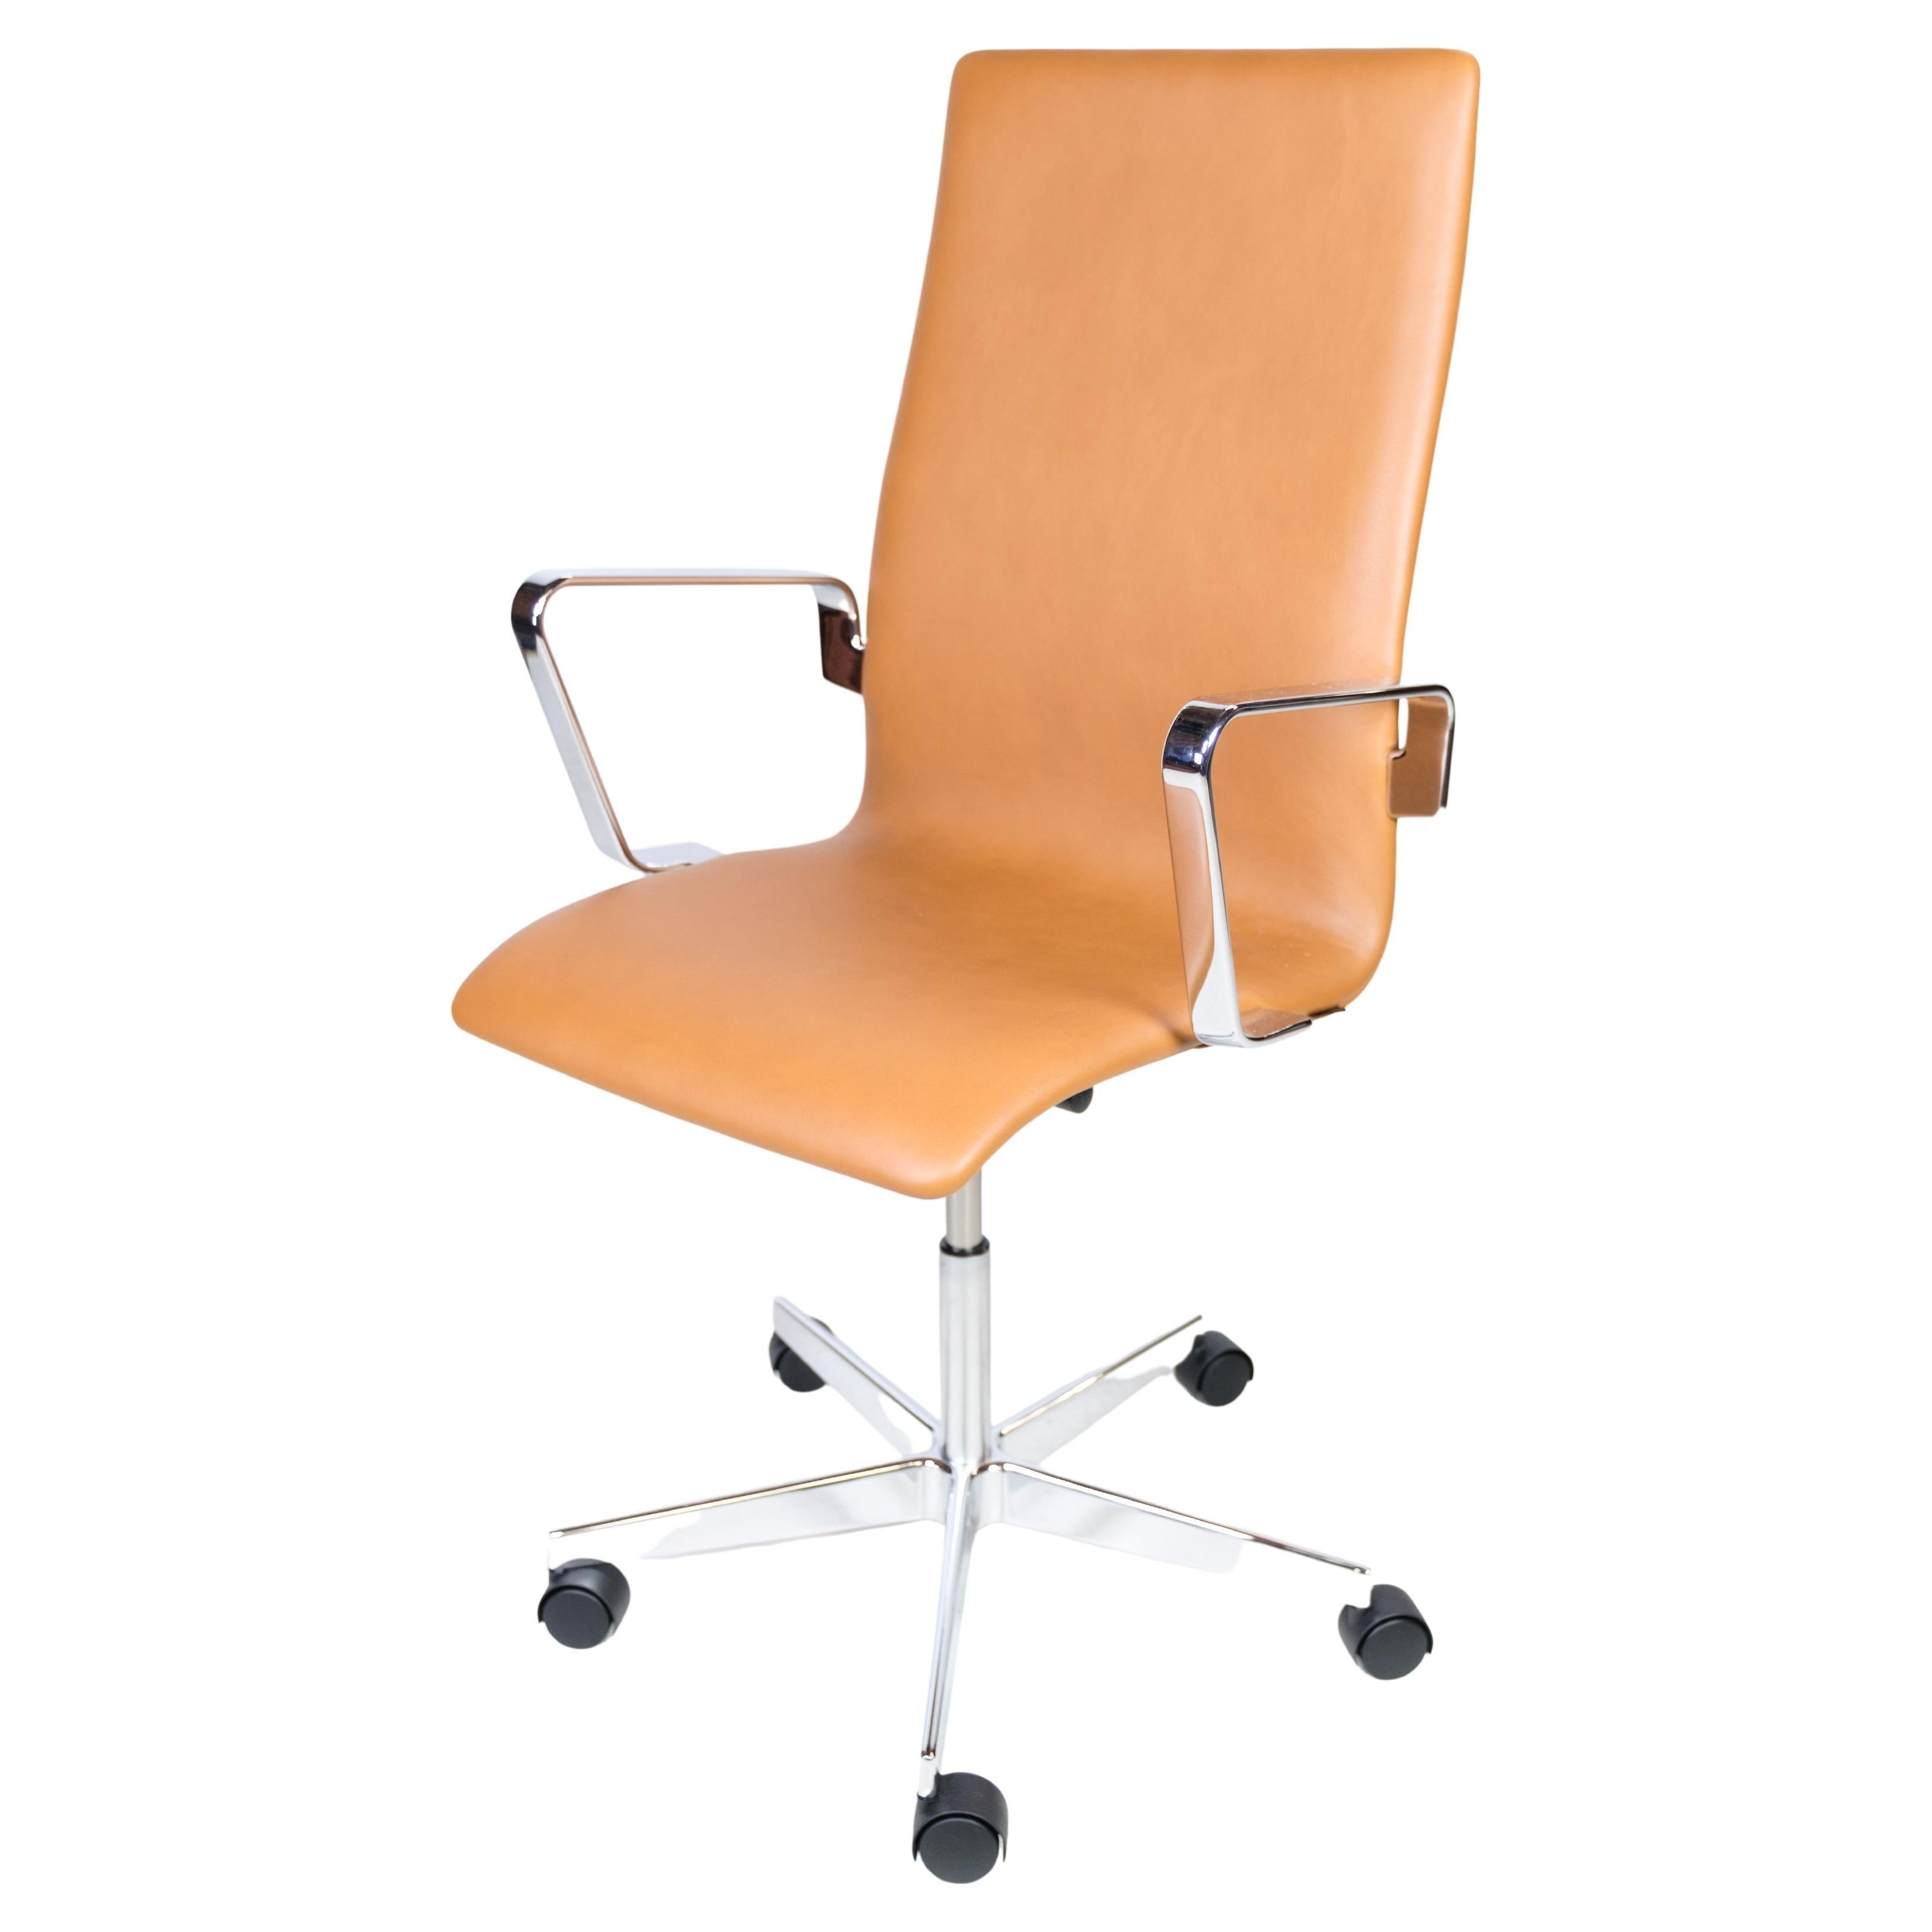 Oxford Classic Office Chair, Model 3293C, Cognac Leather, Arne Jacobsen, 1963